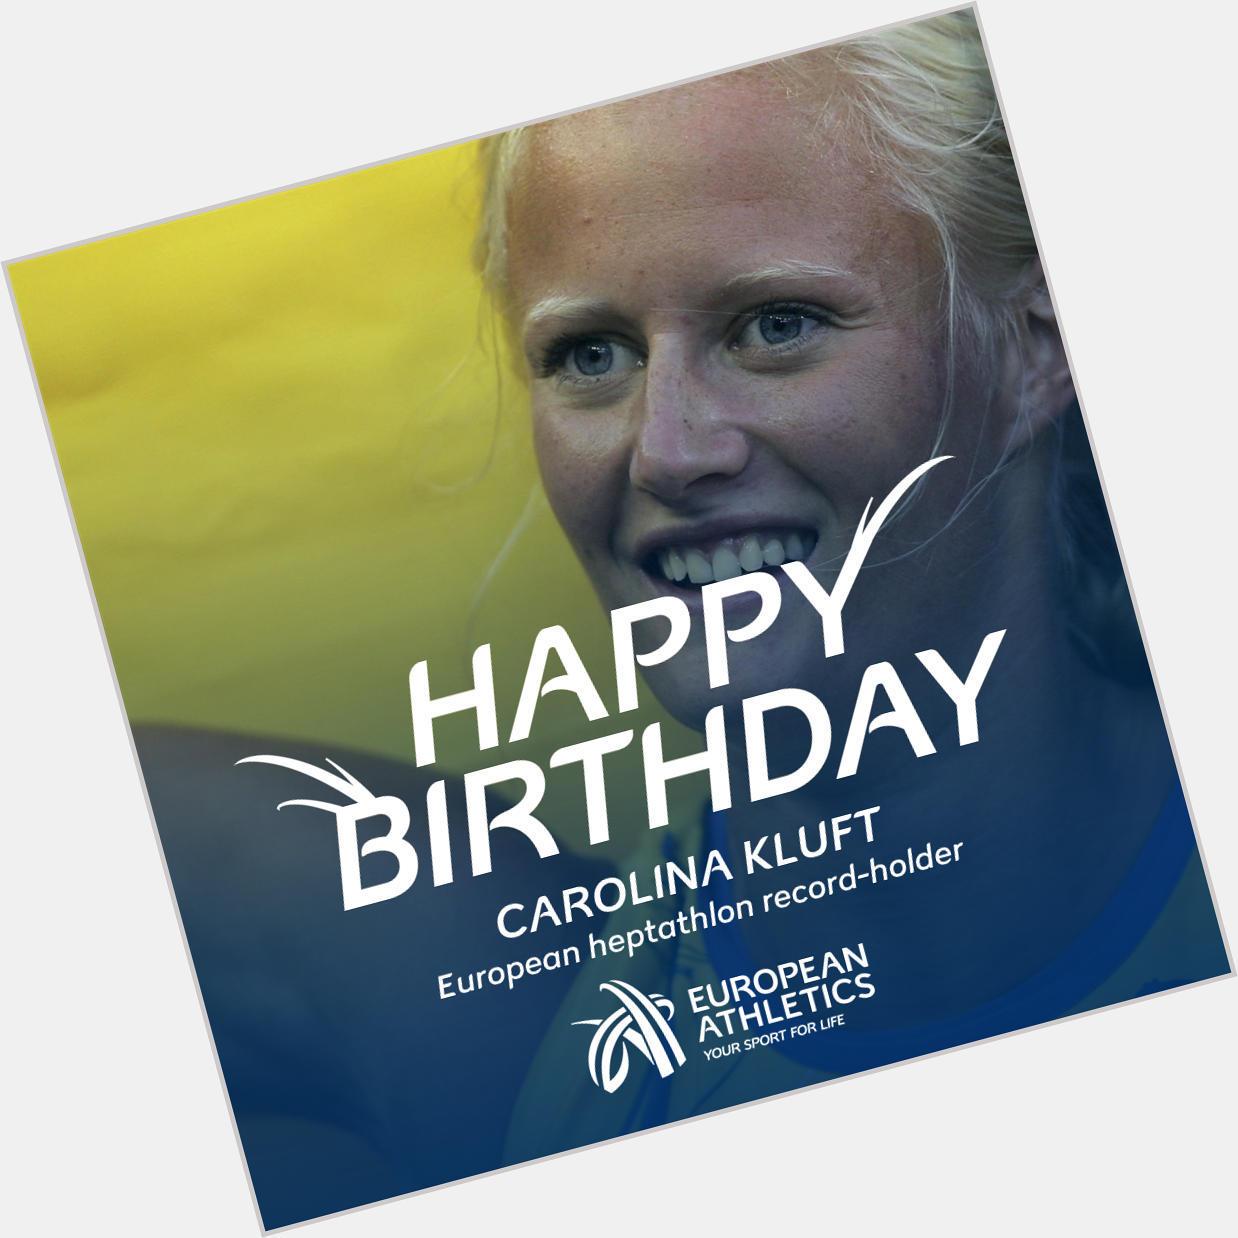 Happy birthday to European heptathlon record-holder and 2002 and 2006 European champion Carolina Kluft! 